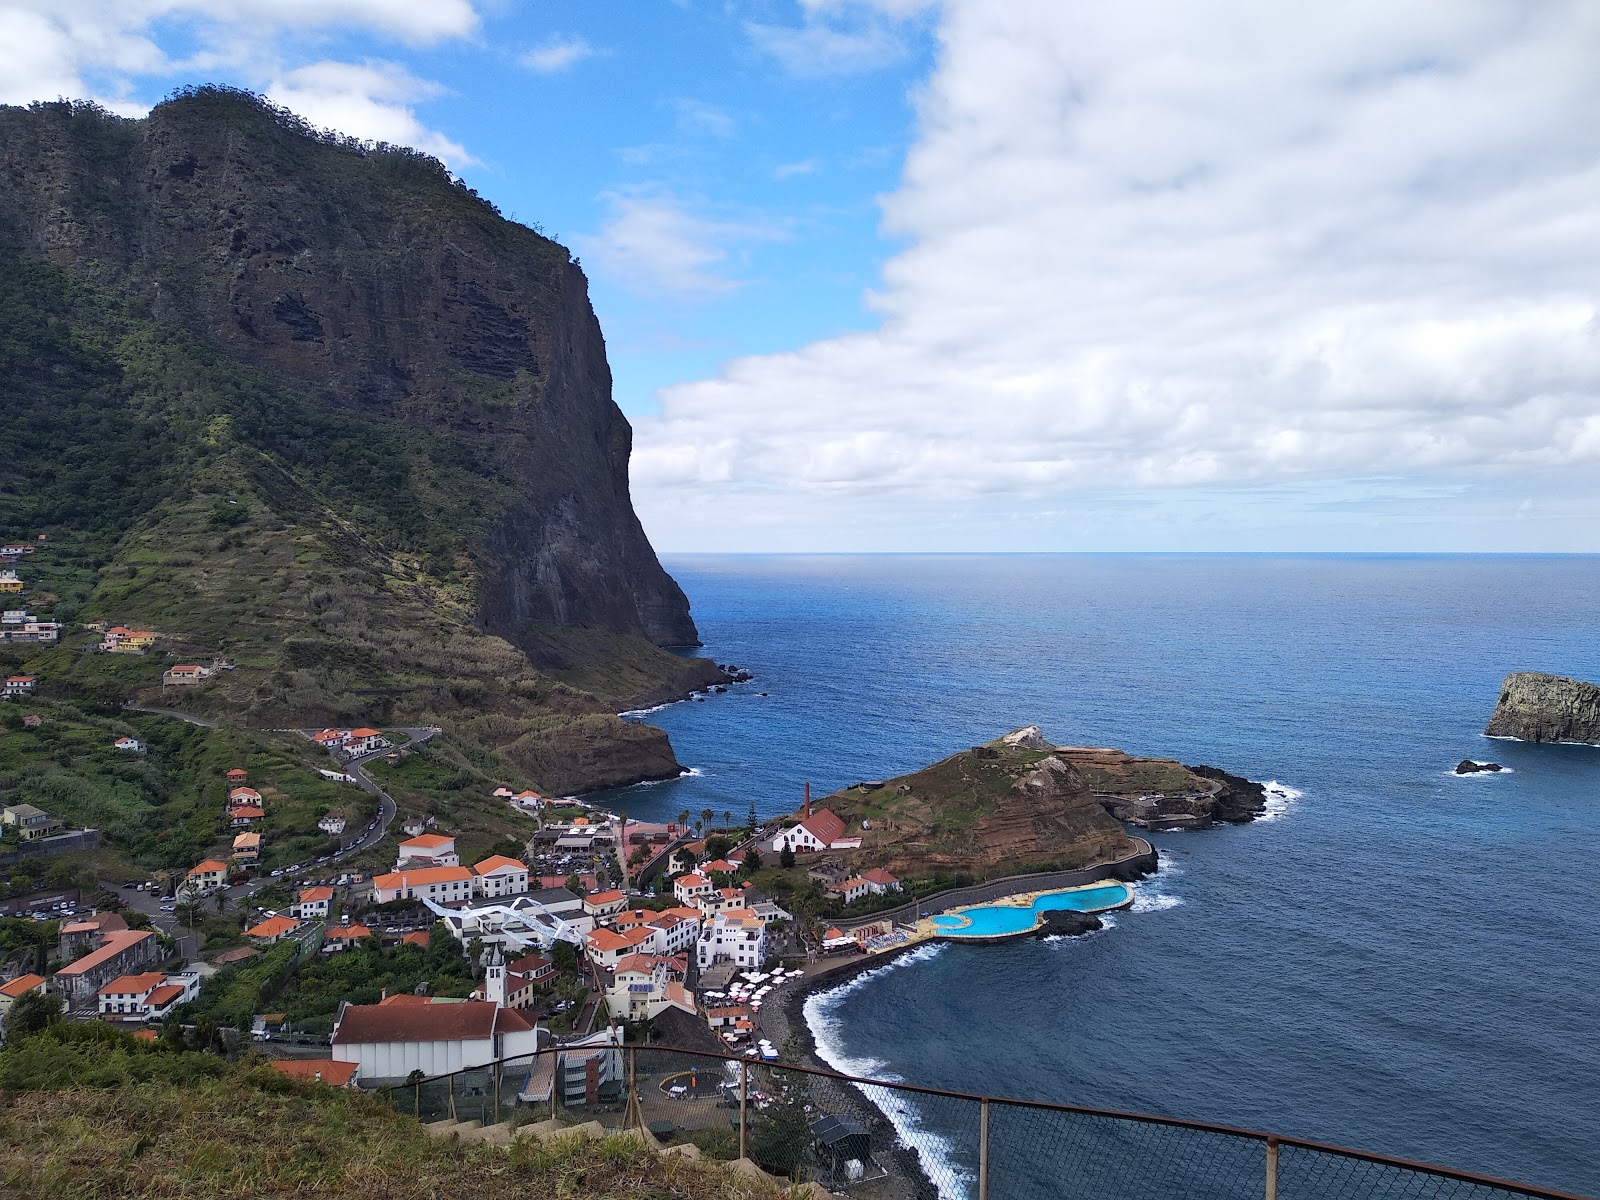 Piscina do Porto da Cruz的照片 背靠悬崖